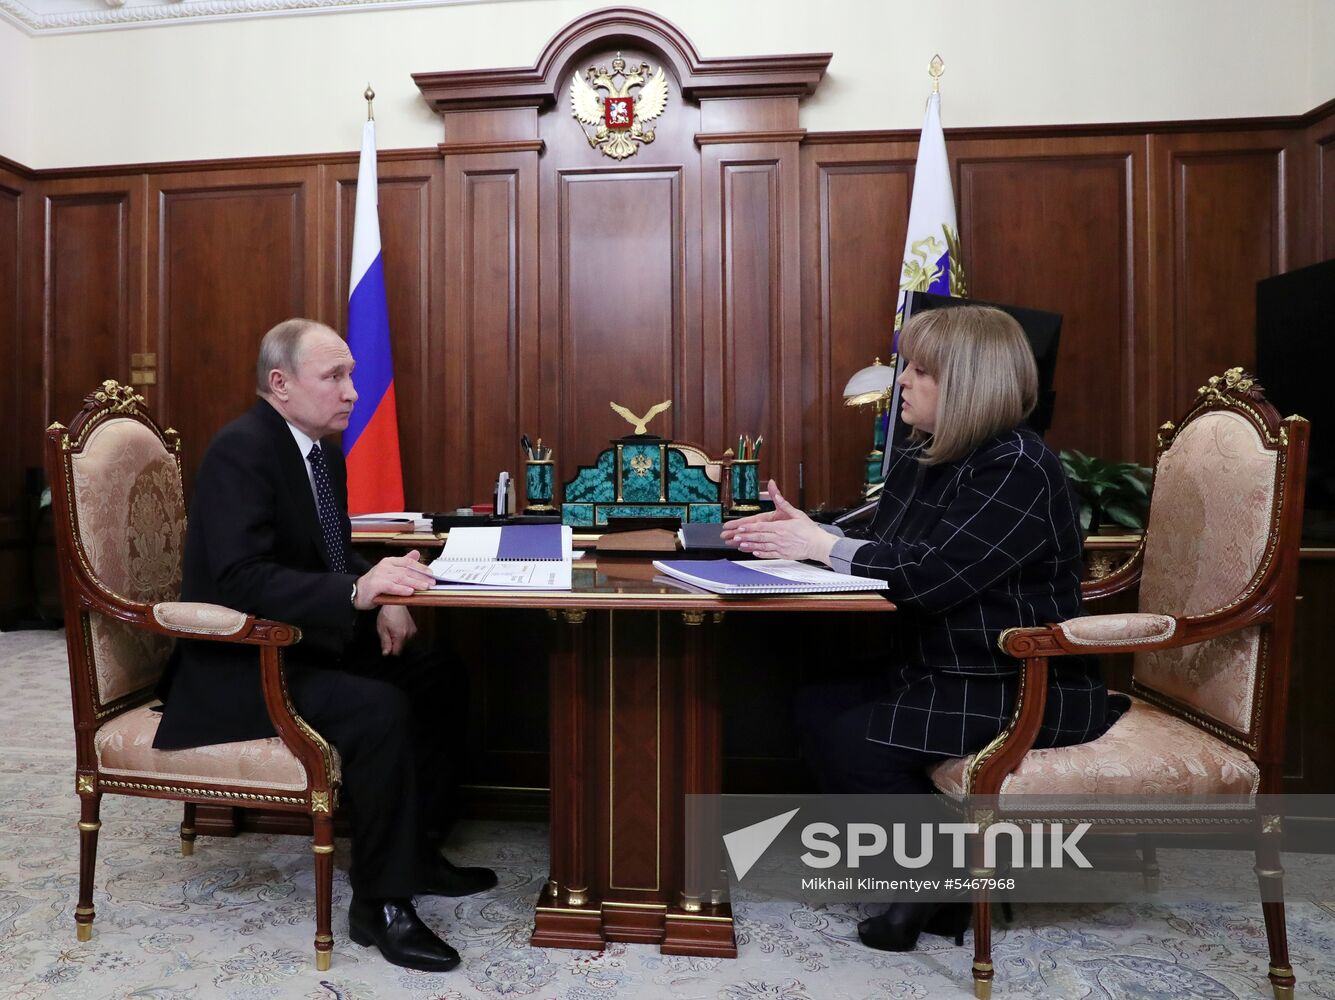 President Vladimir Putin meets with Central Election Commission Chair Ella Pamfilova